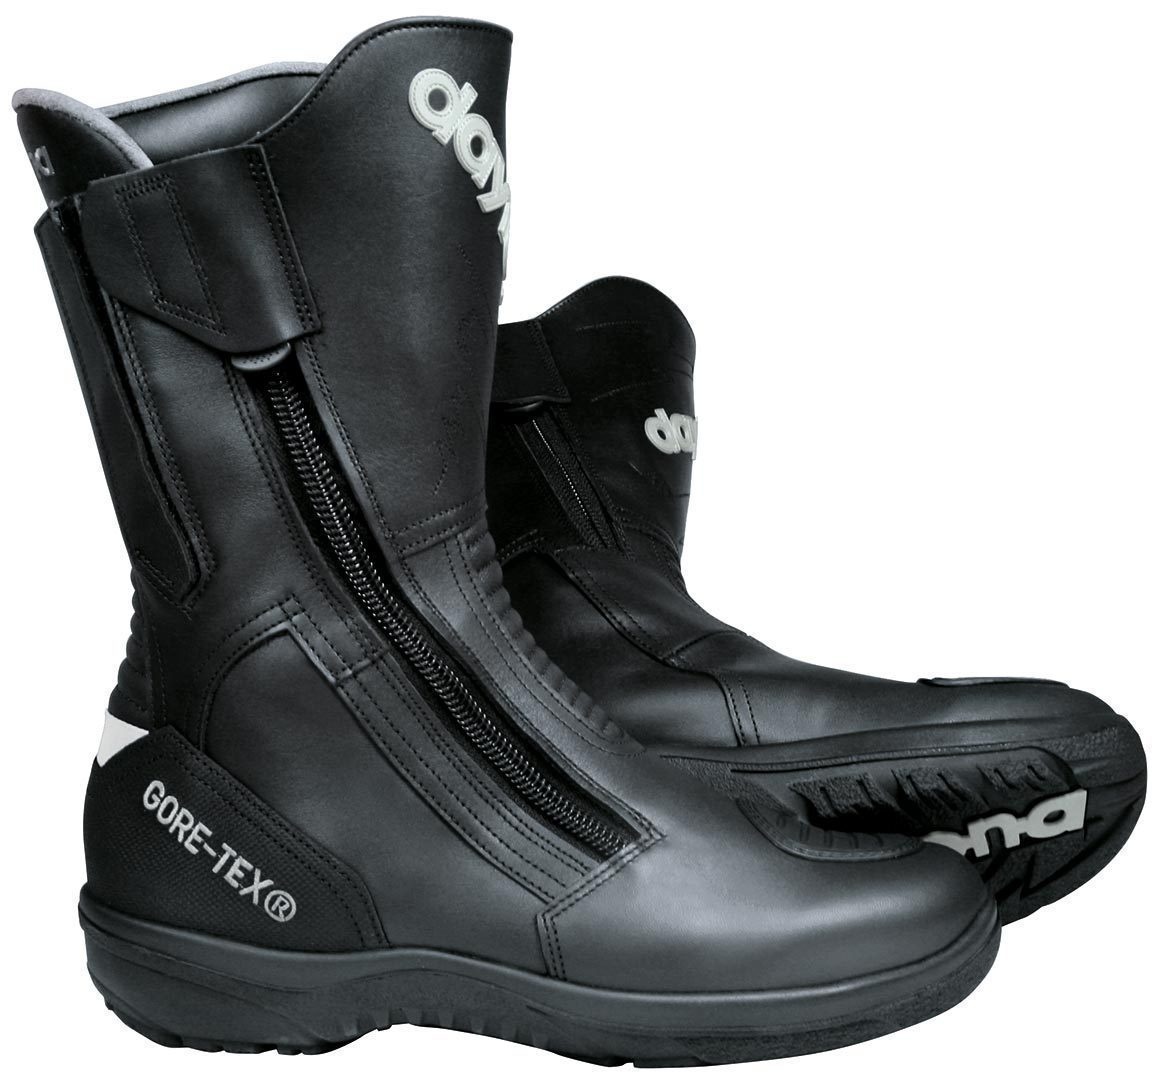 Daytona Road Star GTX L waterdichte motorfiets laarzen, zwart, 50